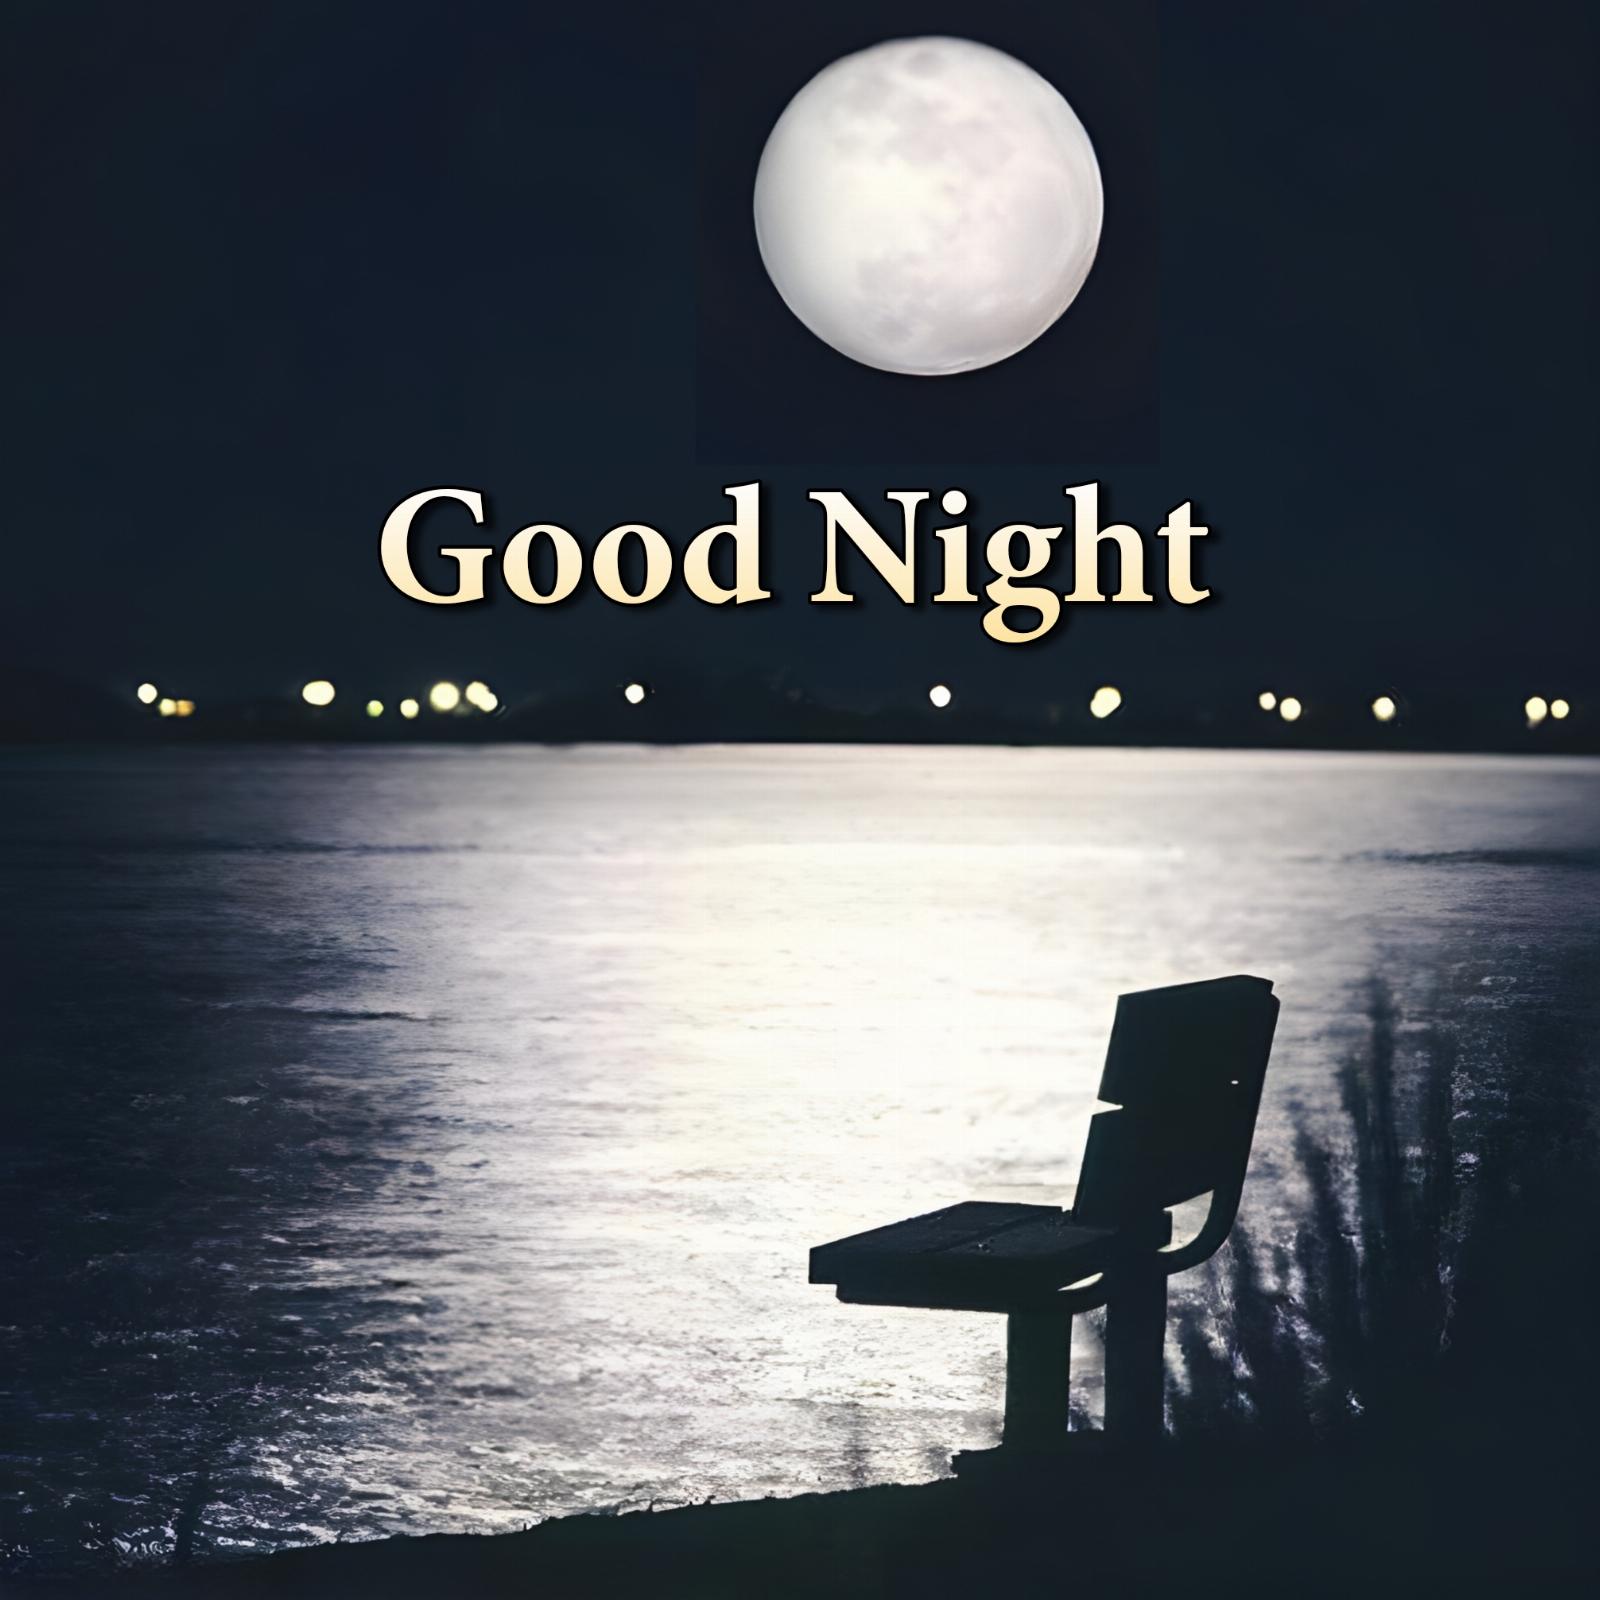 Full Moon Good Night Images